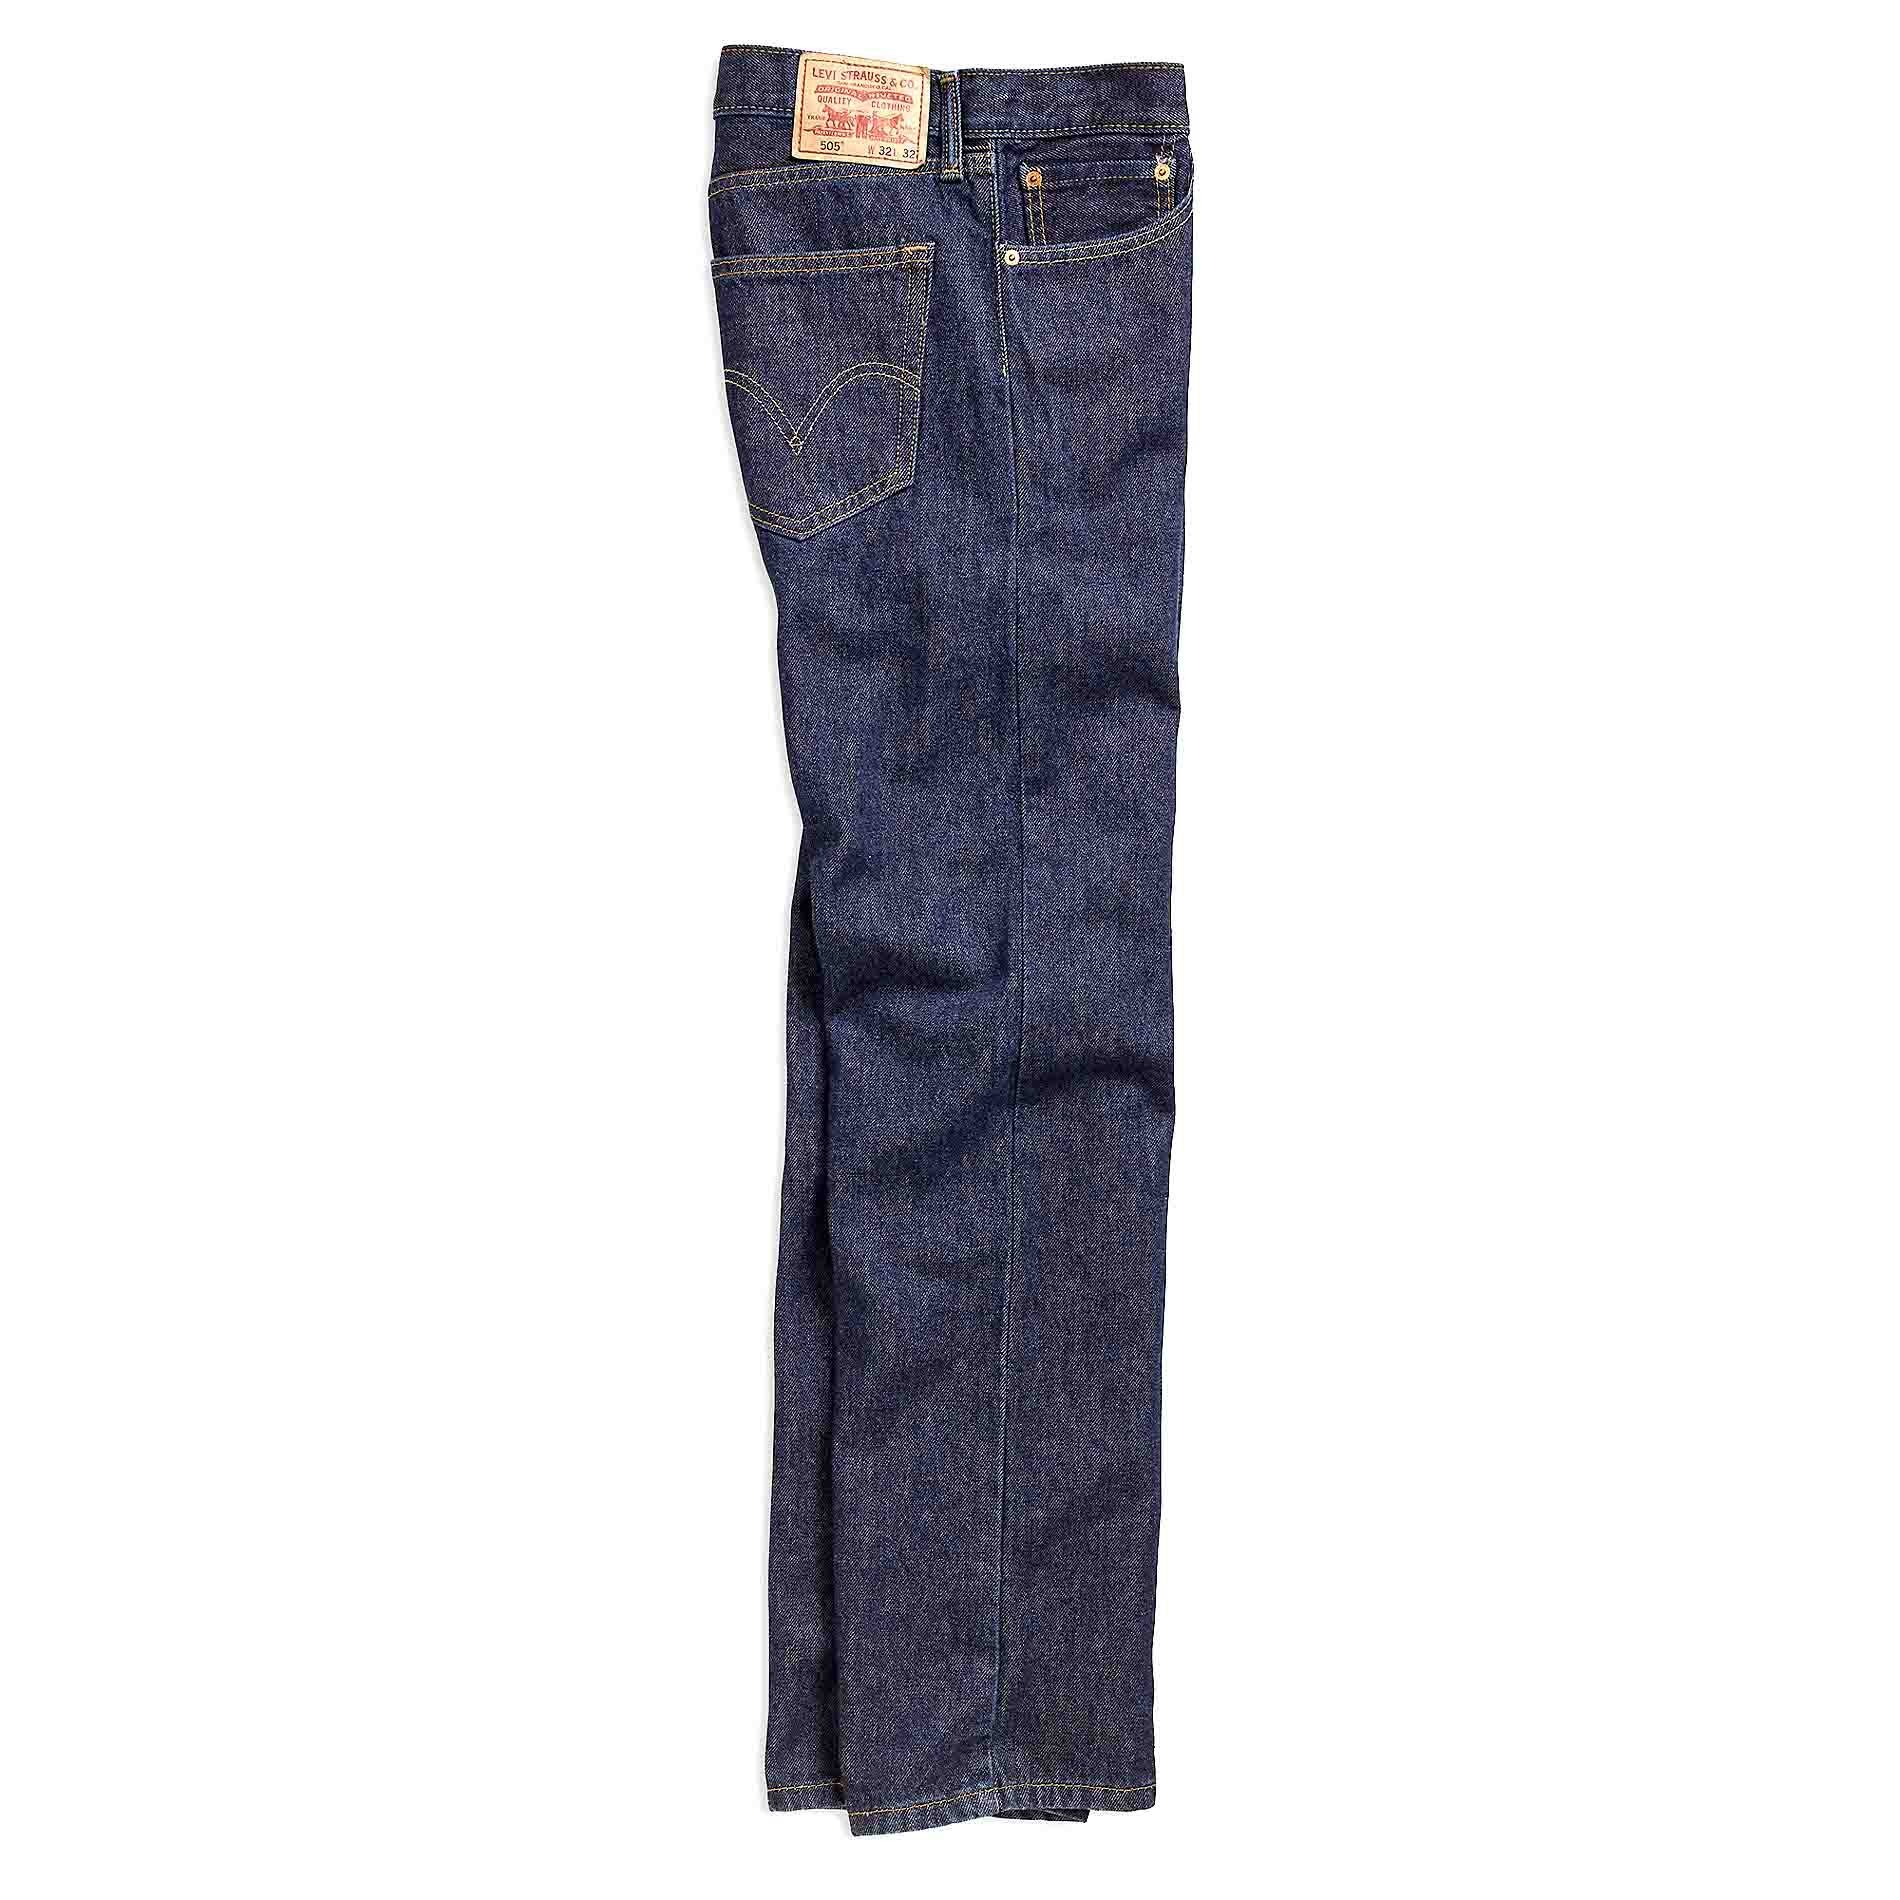 Levi's 505 Regular Fit Jeans Modelo Elo5050216 Talla Plus para Hombre